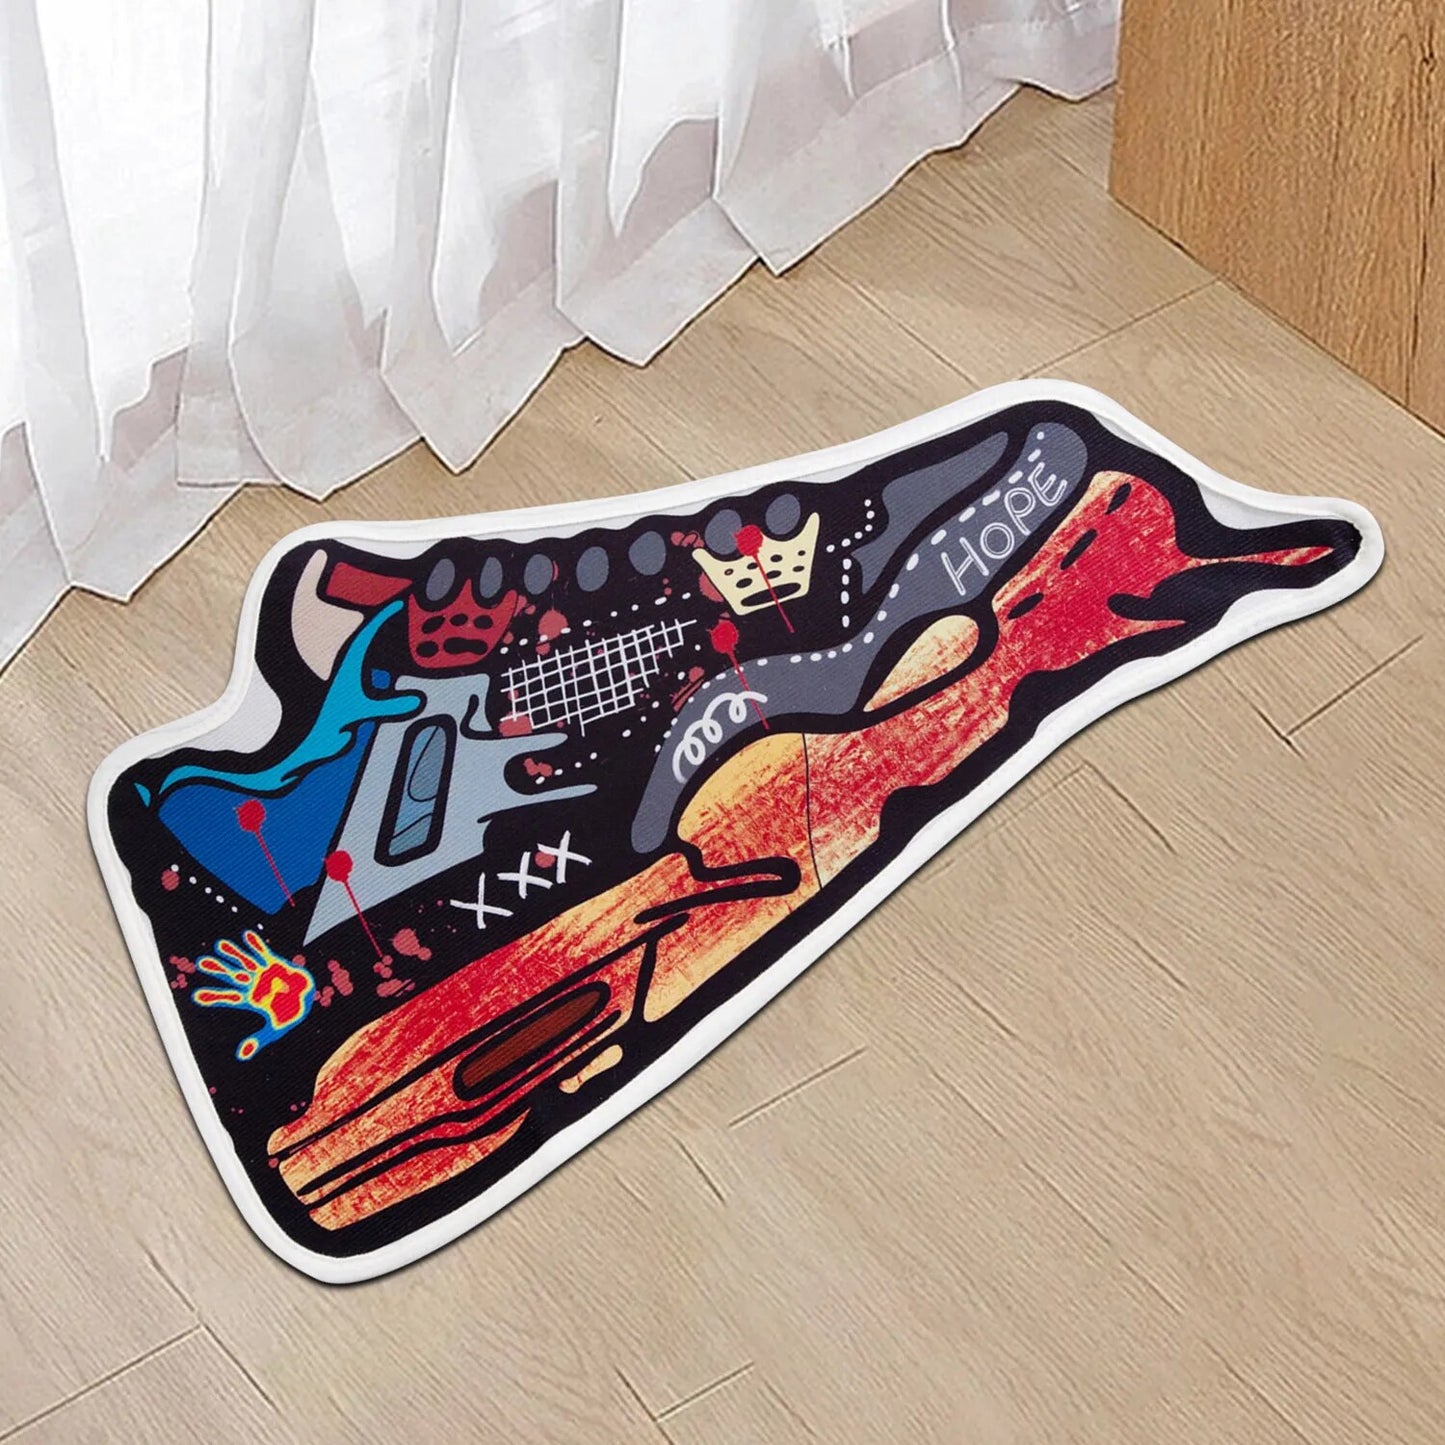 Retro Sneaker Shaped, Graffiti Styled Floormat